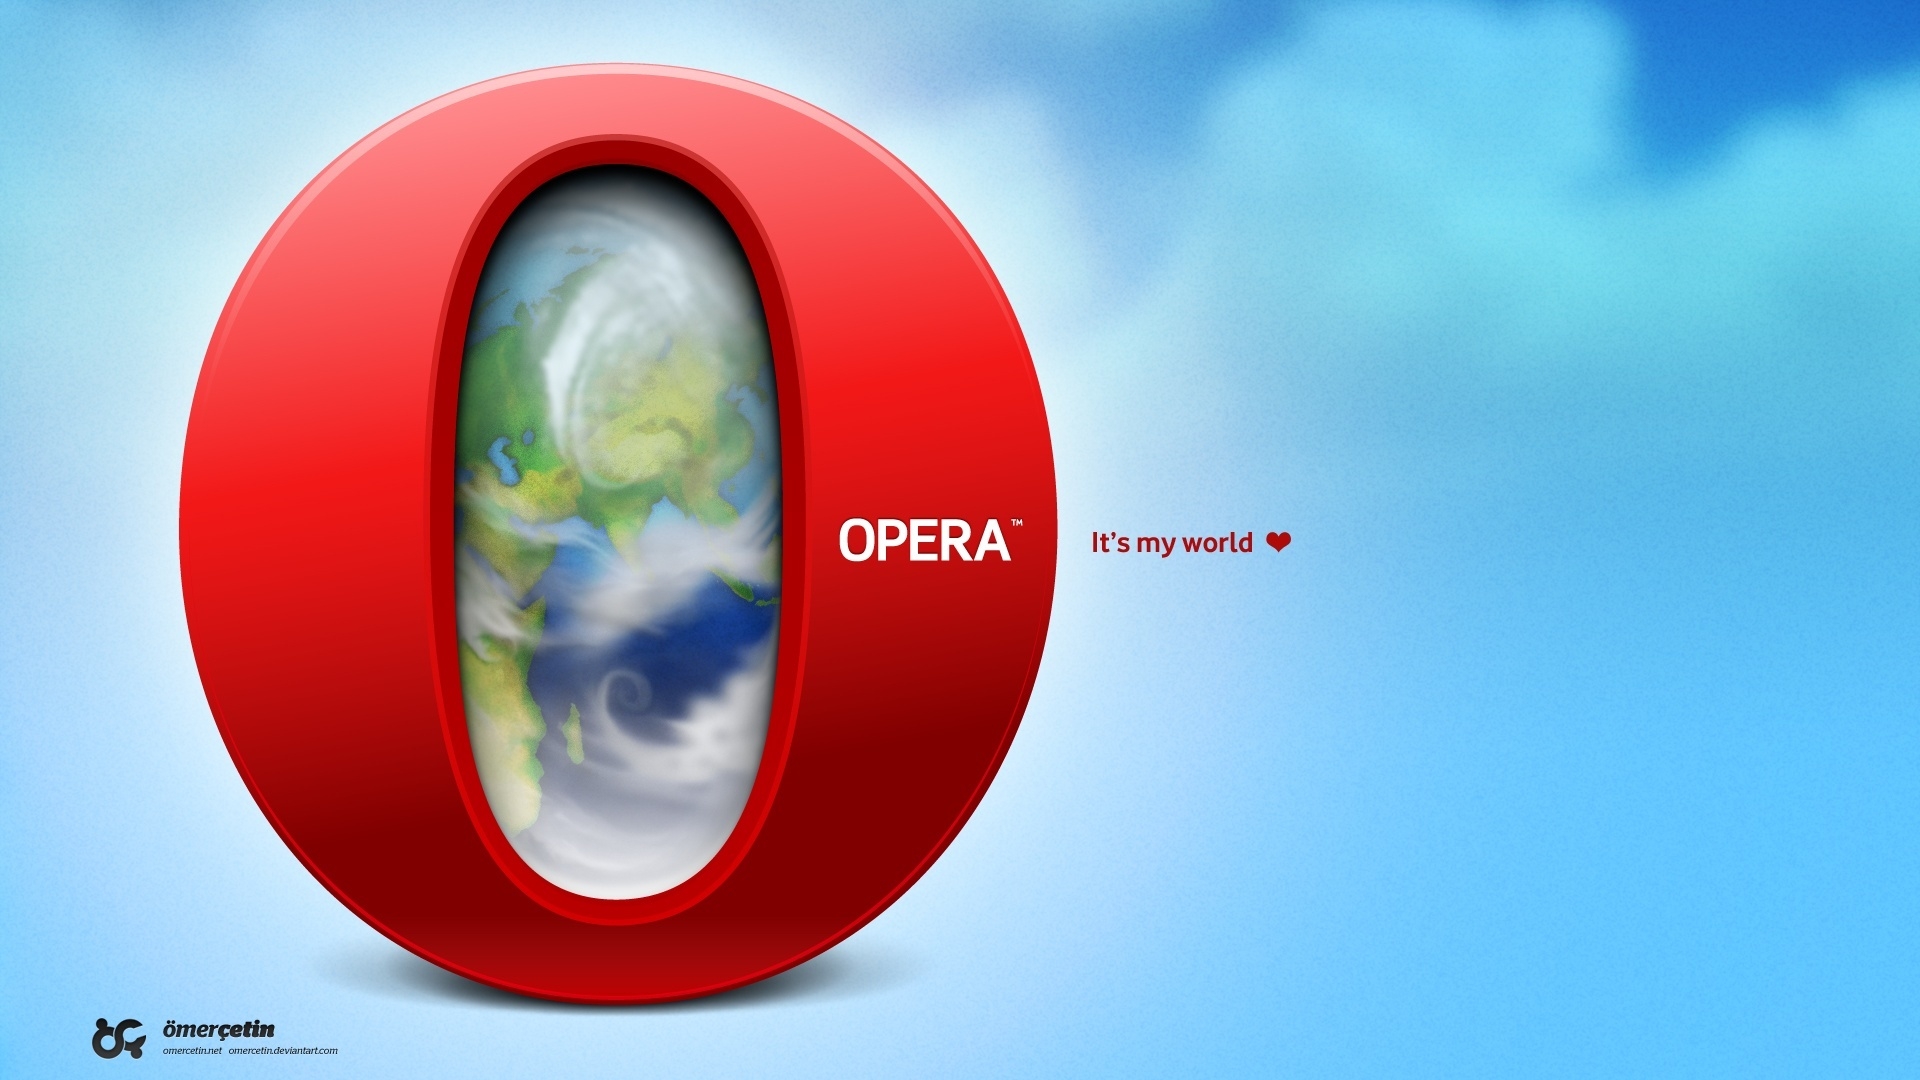 Opera My world for 1920 x 1080 HDTV 1080p resolution